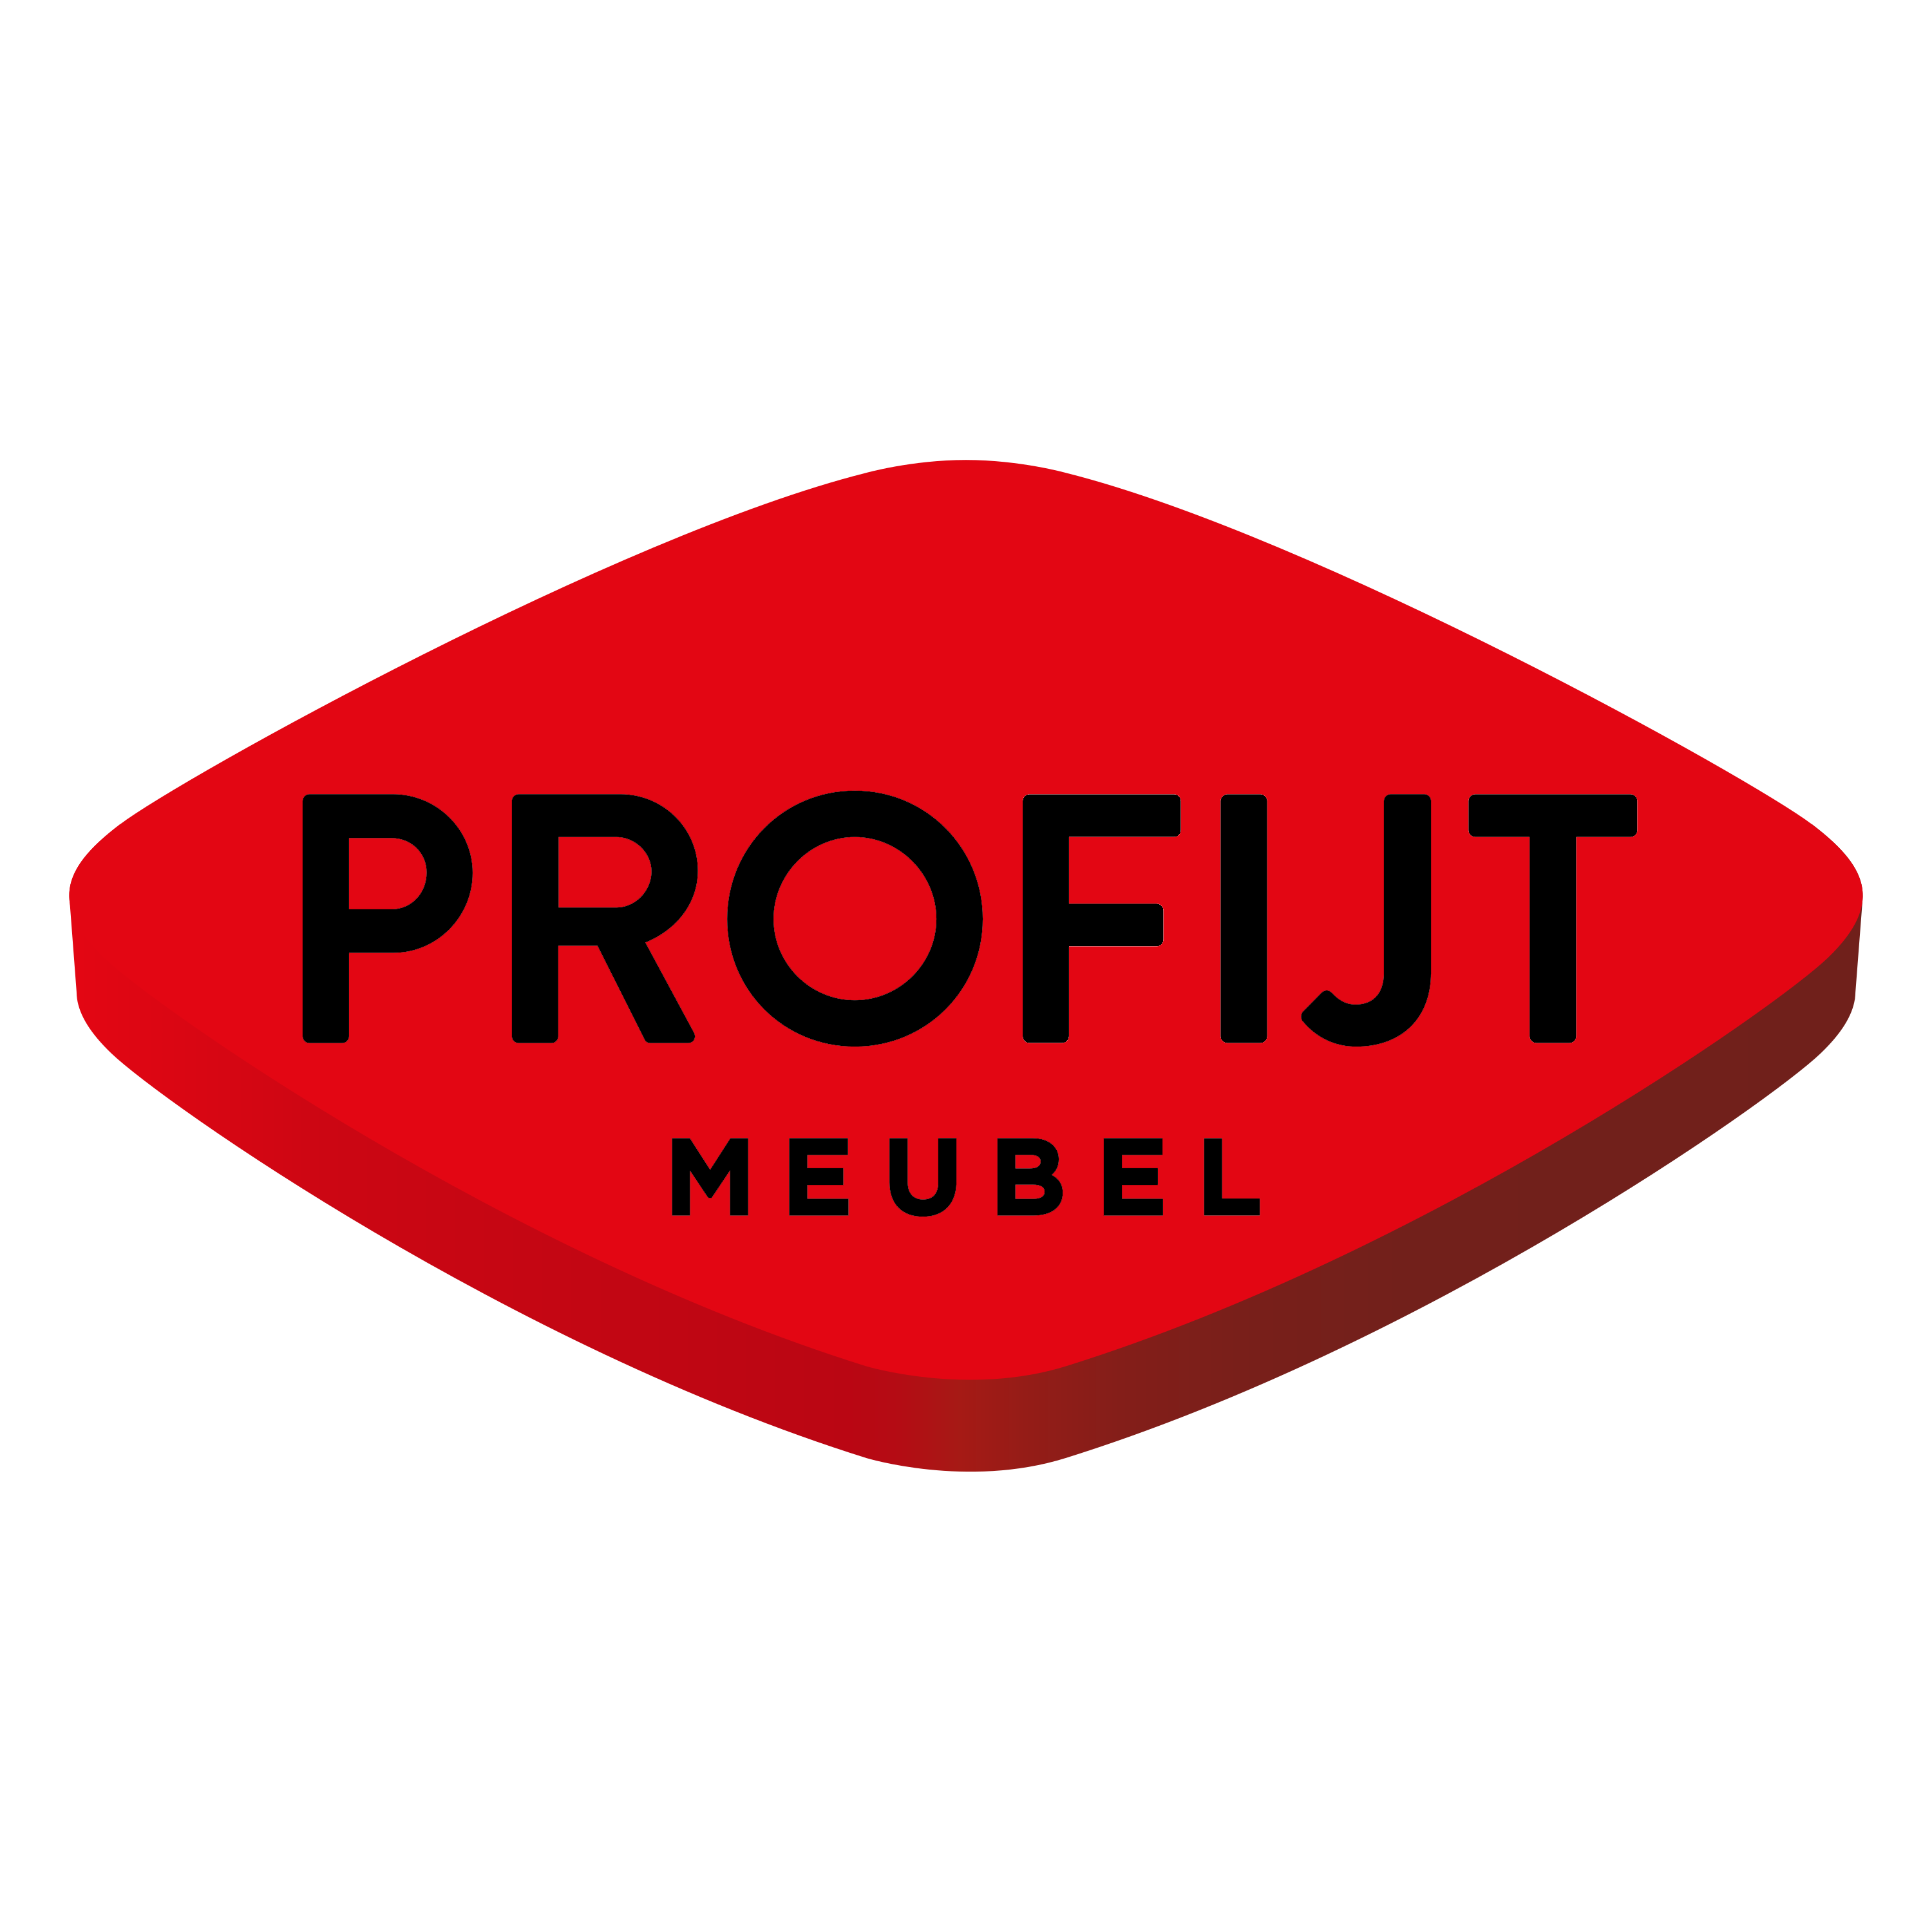 Profijt Meubel Logo Transparent Picture